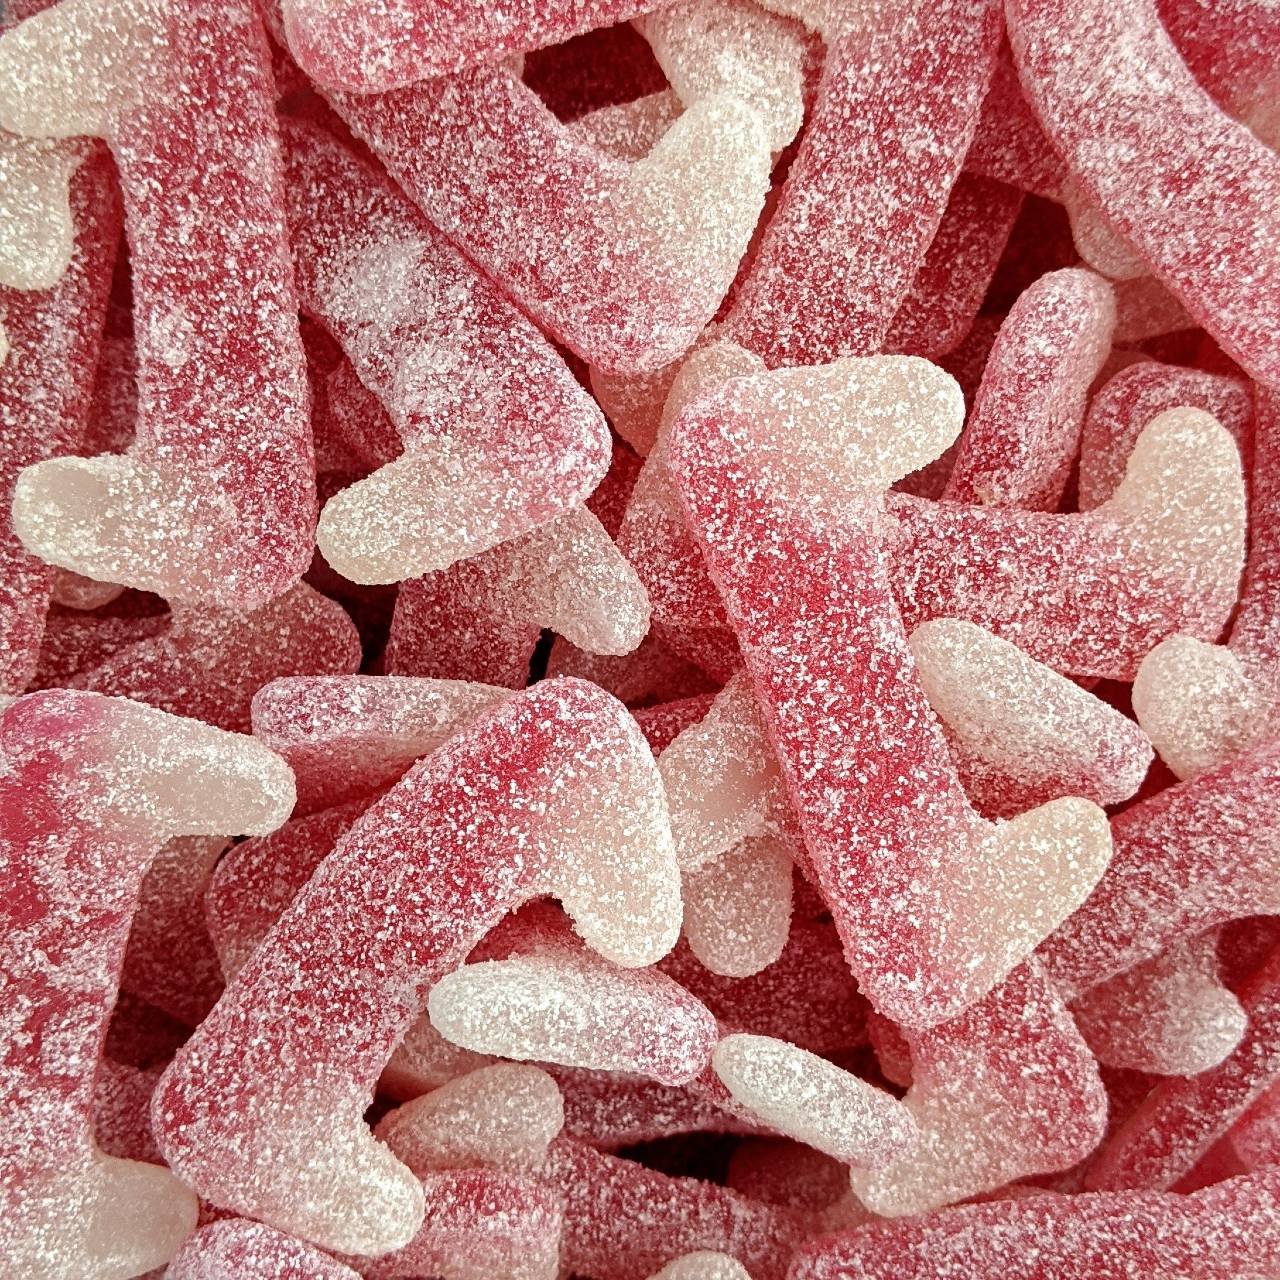 vegan sweets fizzy dracula teeth